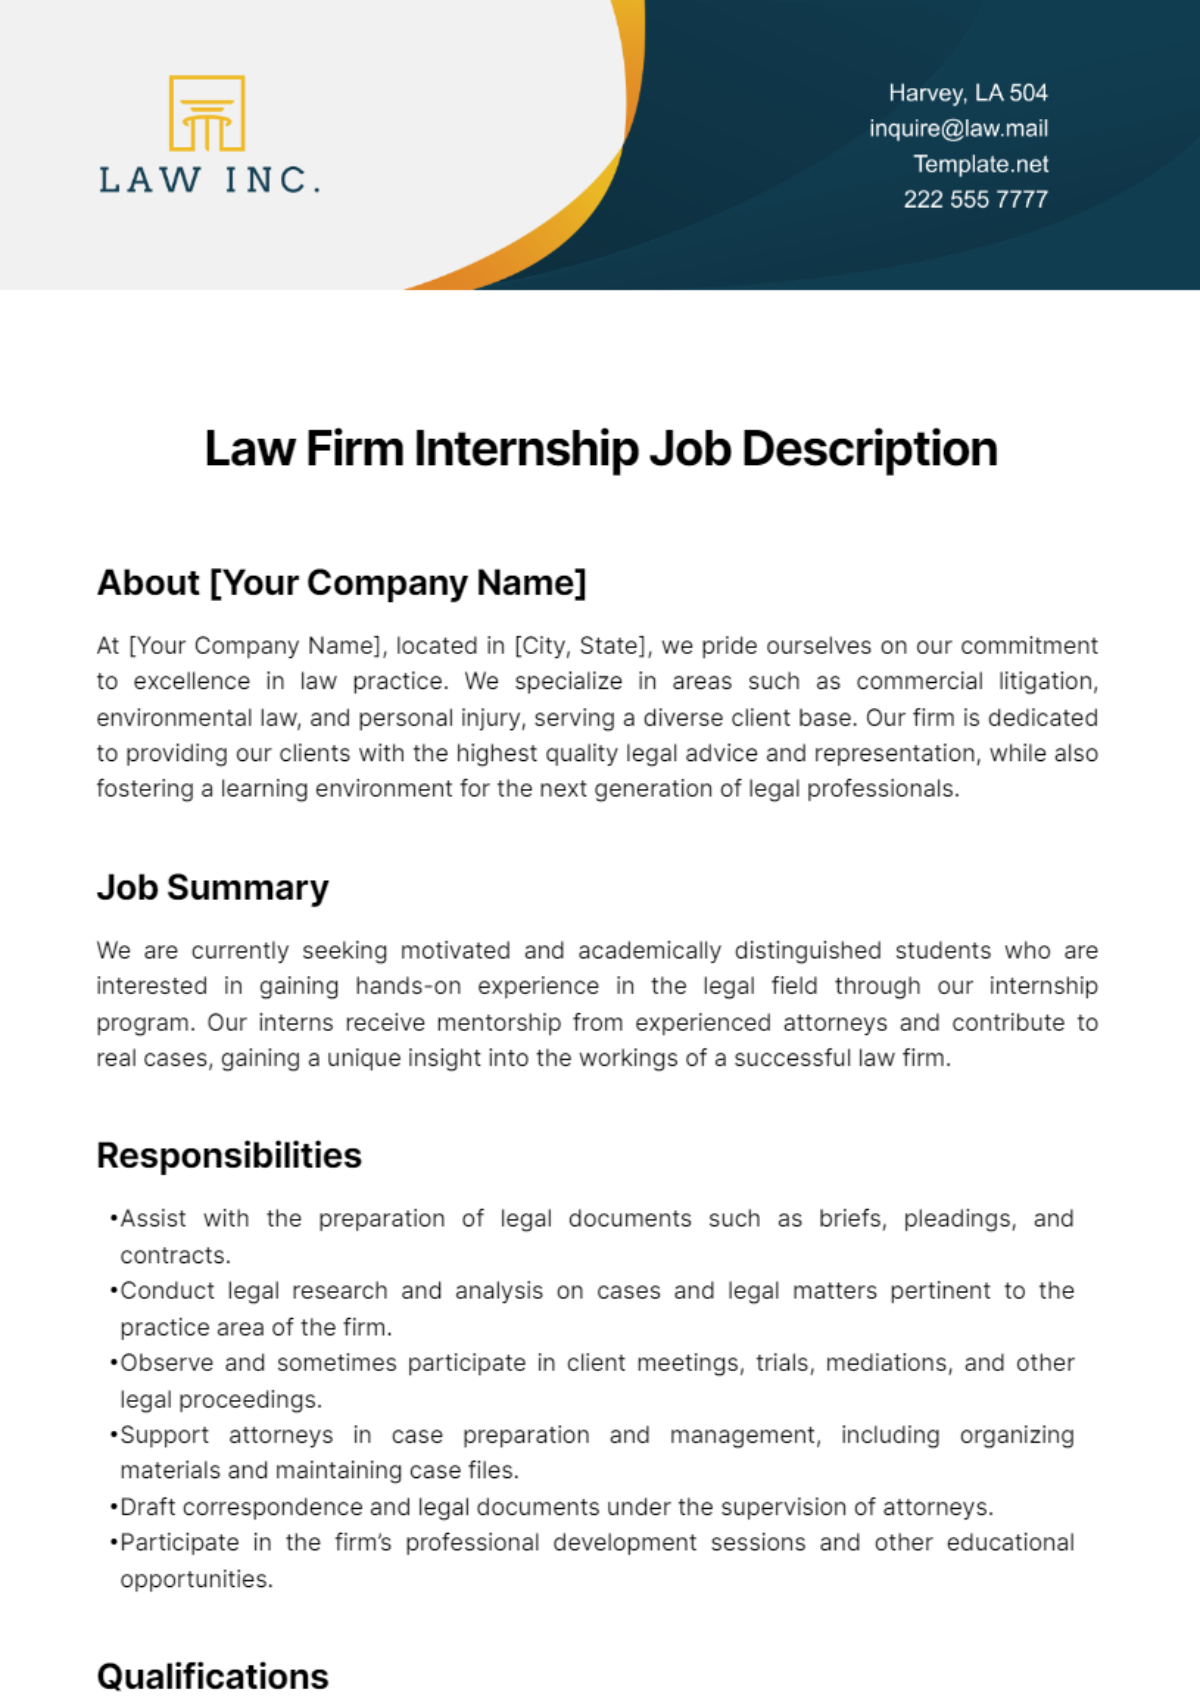 Law Firm Internship Job Description Template